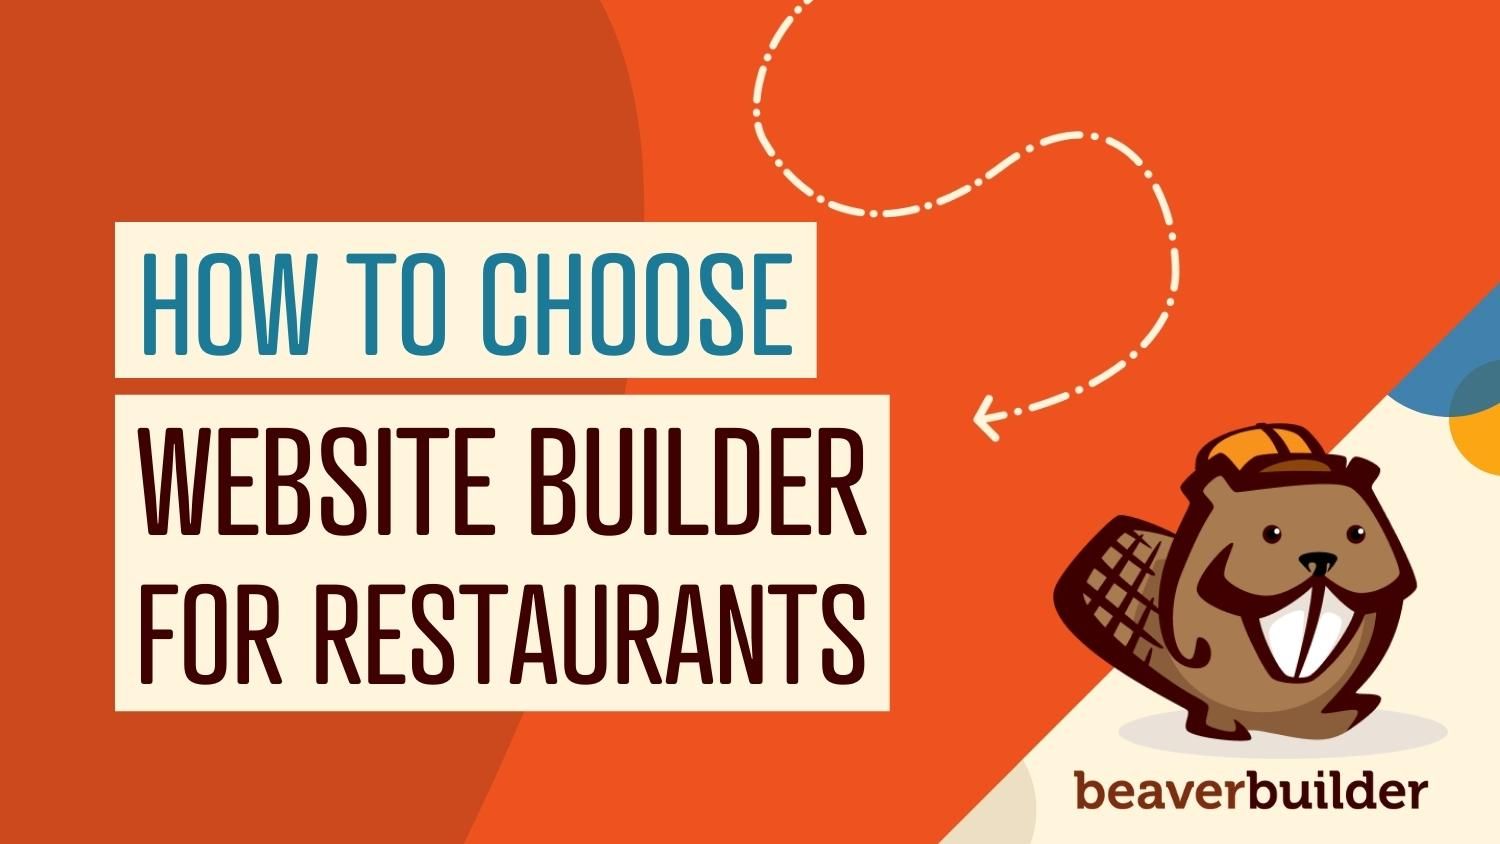 How to choose best website builder for restaurants